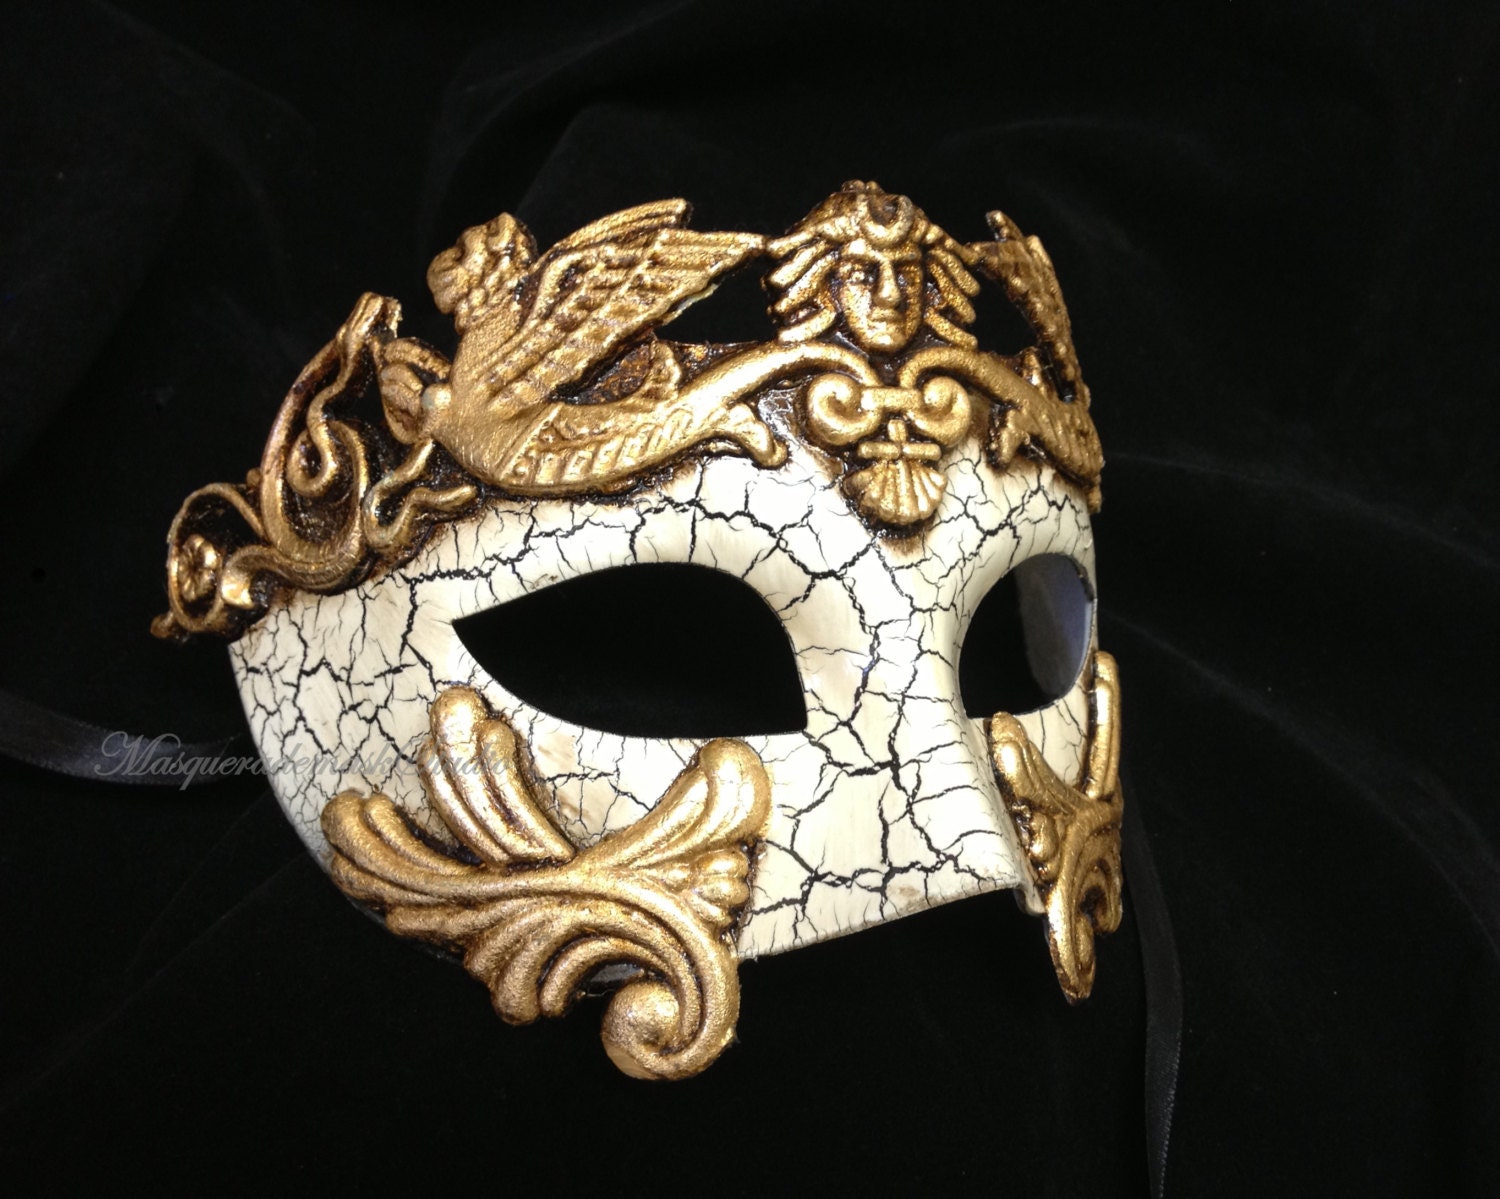 ~SÁBADO DE MARATÓN DIVAGUÍSTICO~ Venecia S. XVIII: Baile de máscaras - Página 9 Il_fullxfull.499459370_2l21